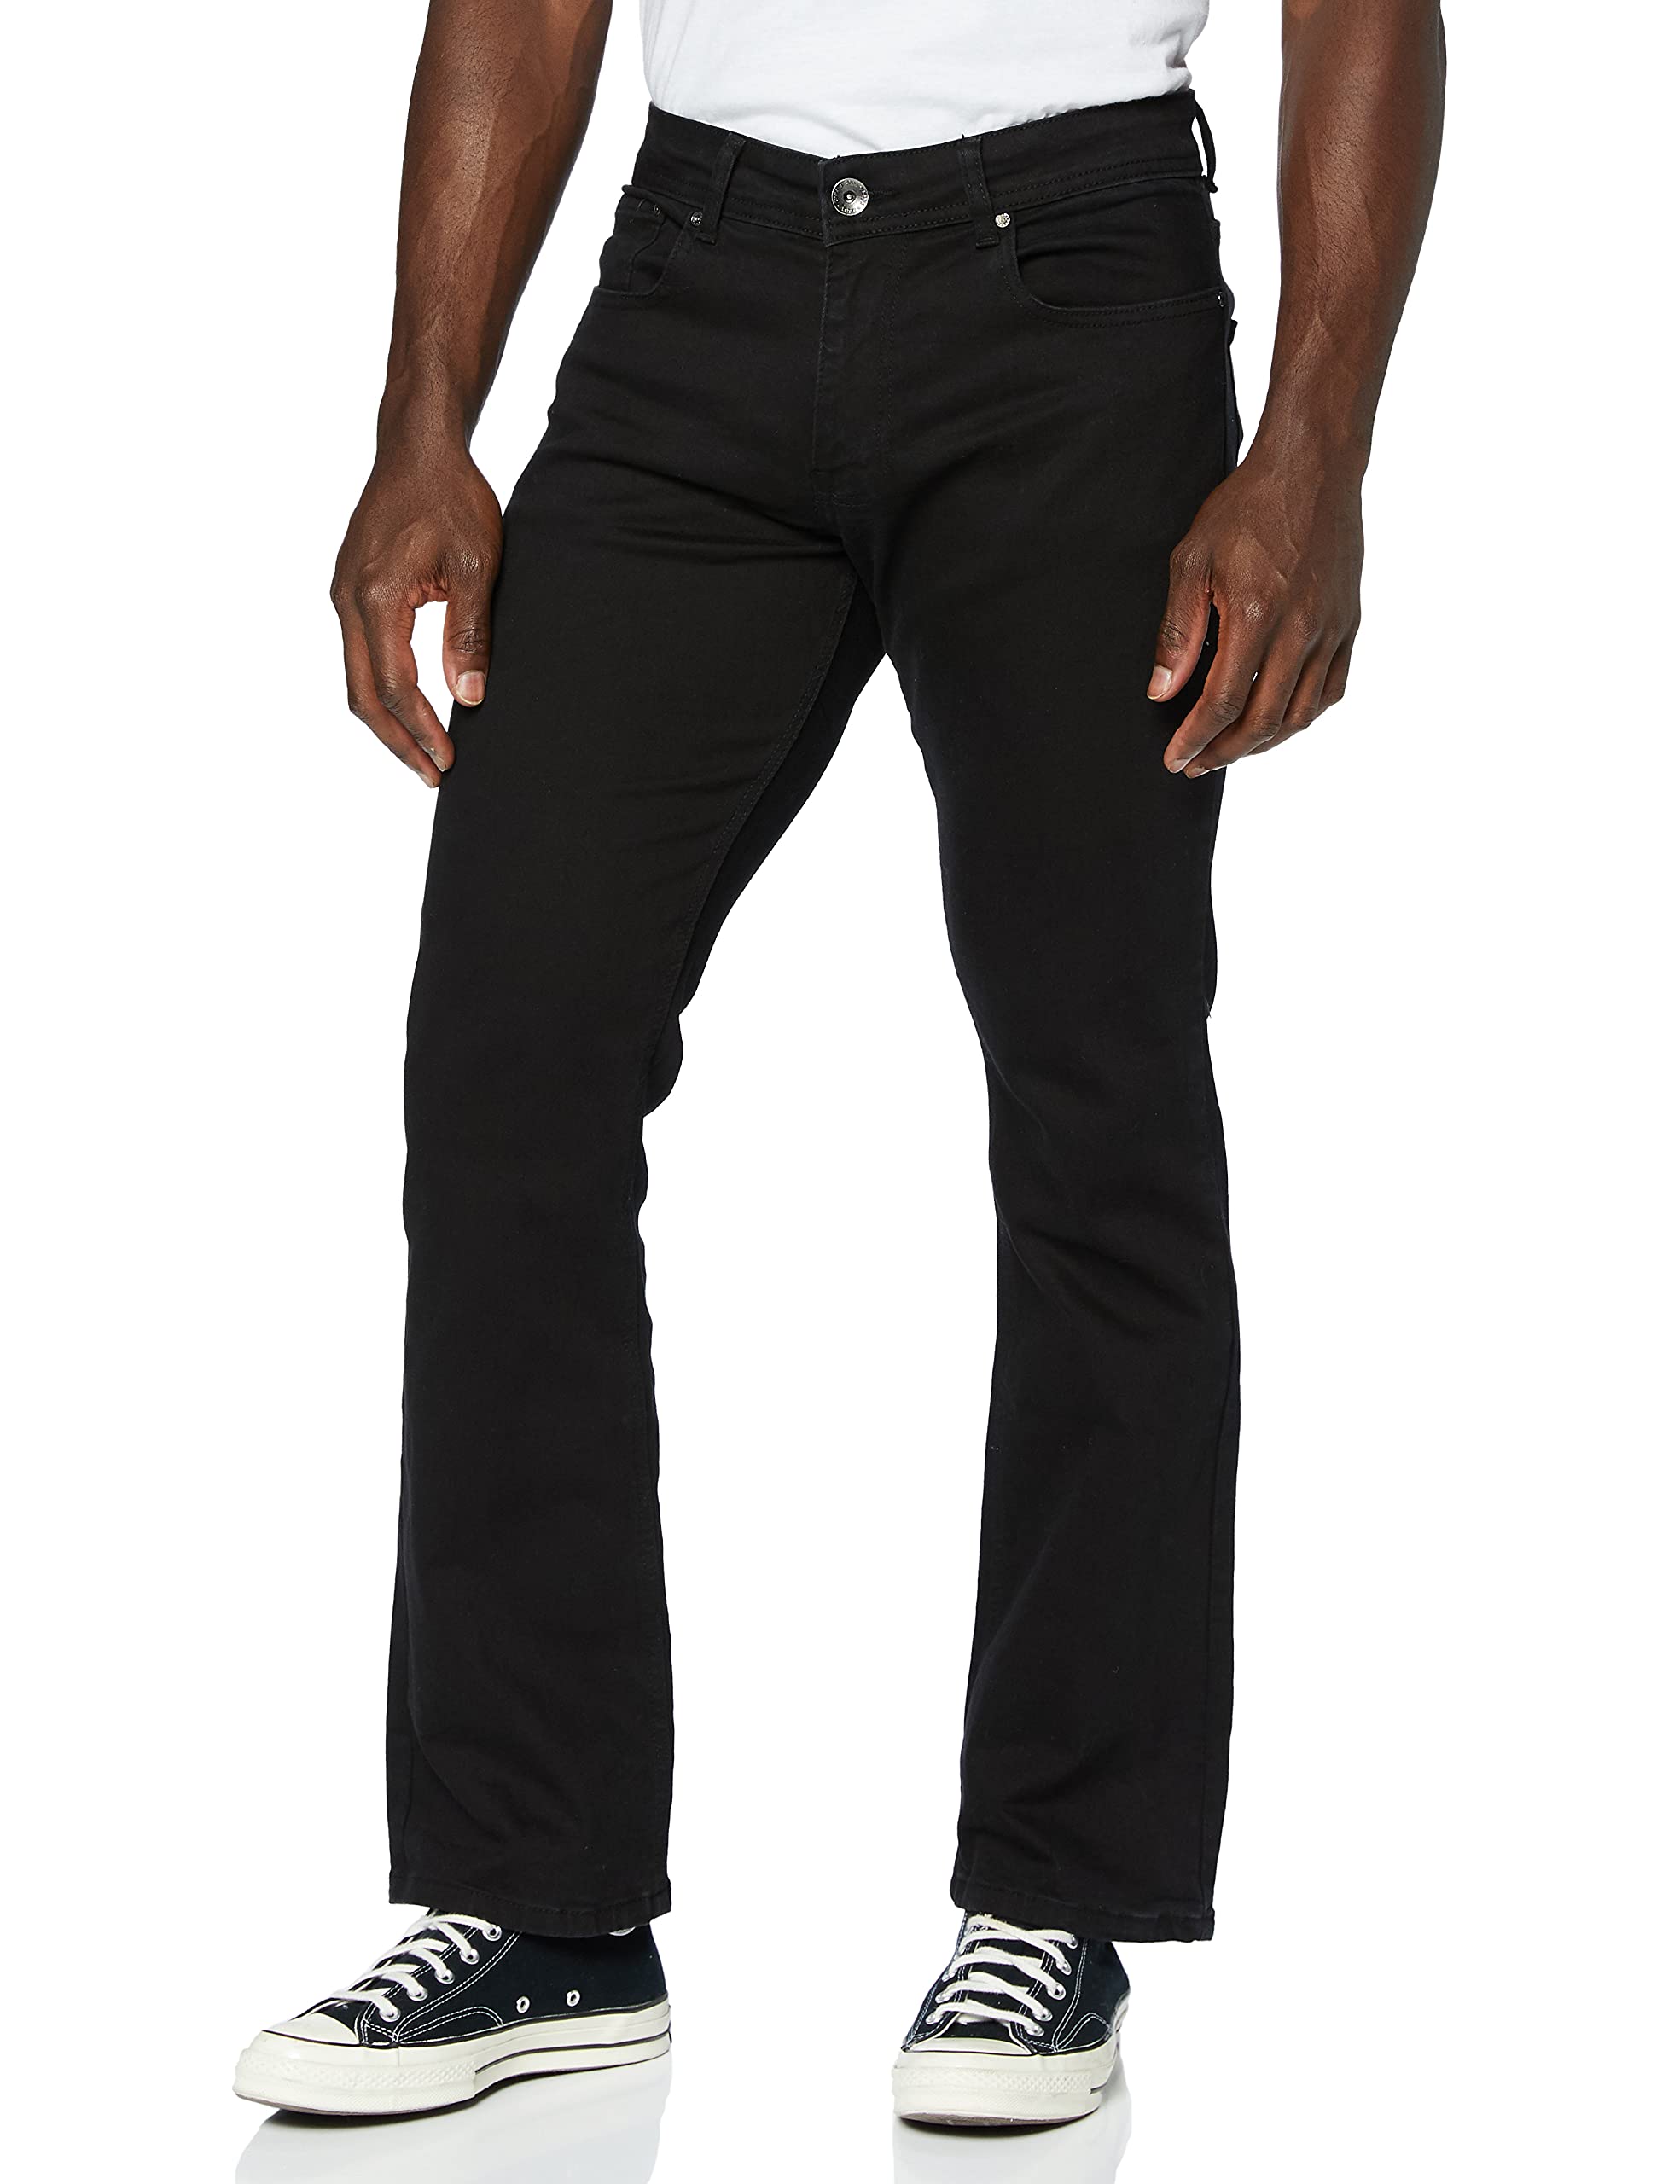 Enzo Herren Ez401 Bootcut Jeans, Schwarz (Black Blk), 30W / 30L